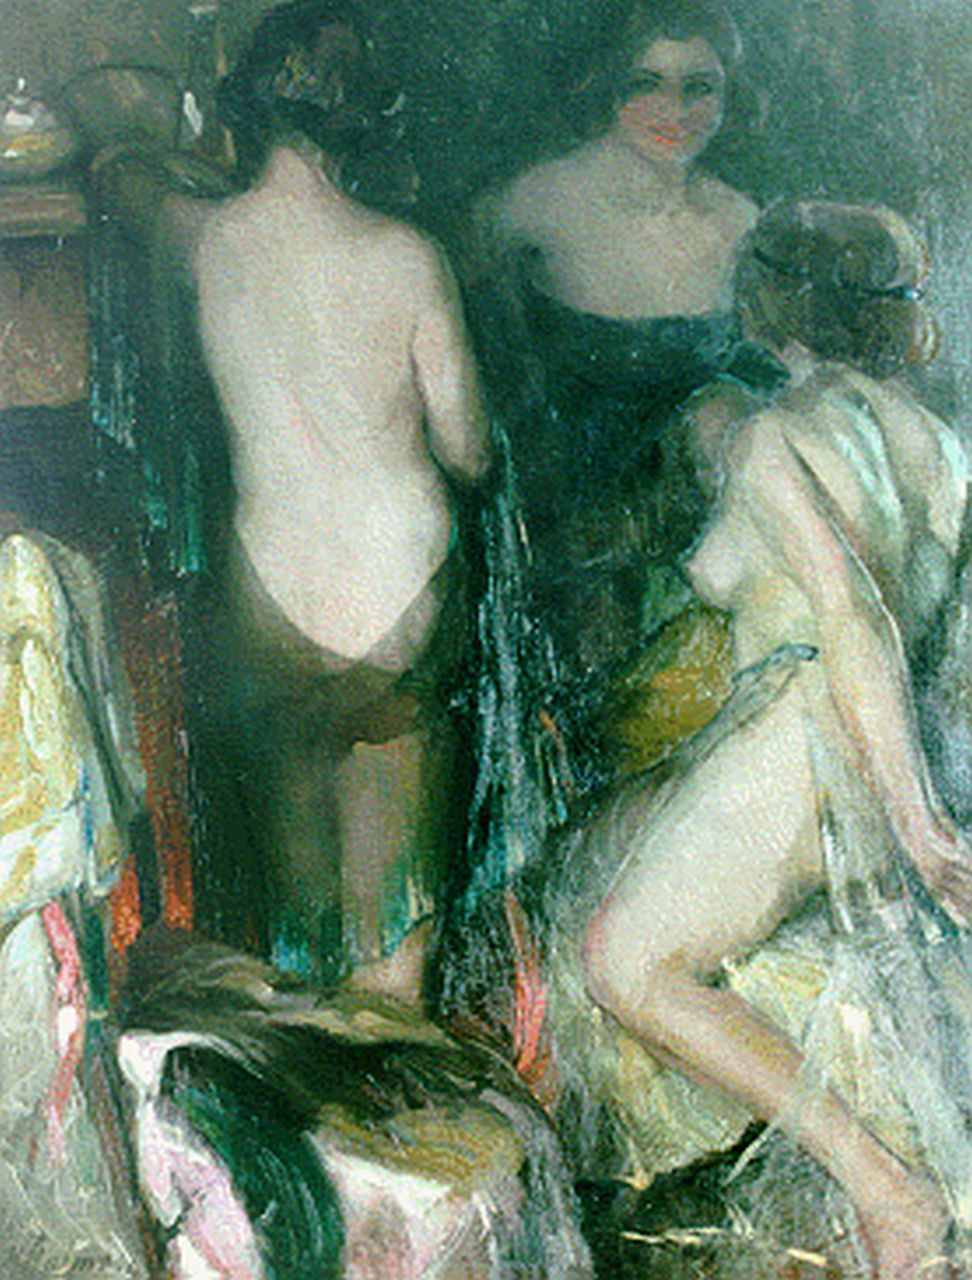 Malmesi M.G.P.  | Mariano Giuseppe Pietro Malmesi, Drie gratiën, olieverf op doek 123,9 x 95,3 cm, gesigneerd linksonder en gedateerd 1926